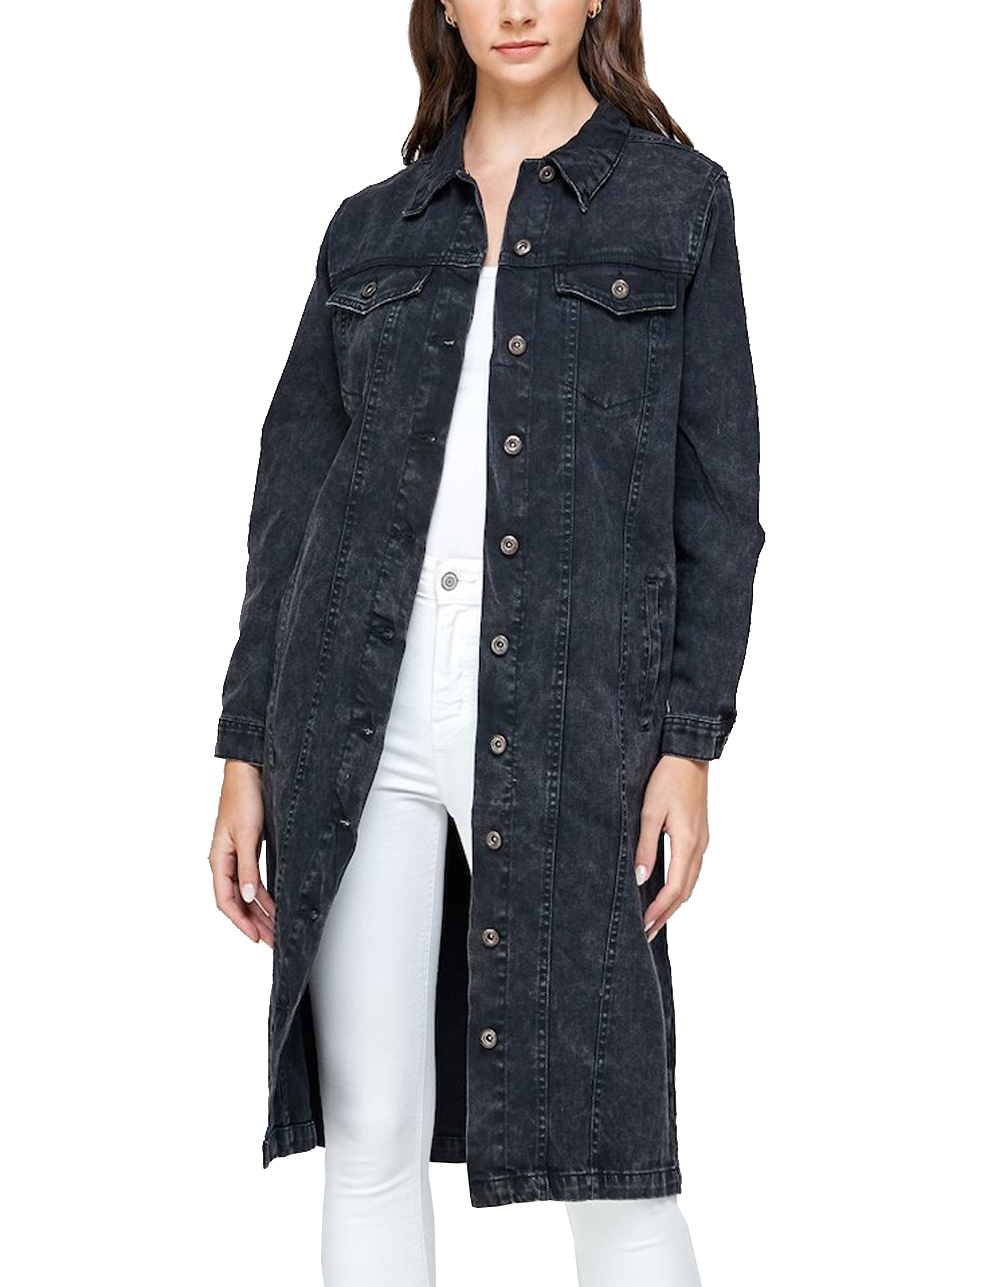 Women's Long Casual Maxi Length Denim Cotton Coat Oversize Button Up Jean Jacket (Mineral Black, M) - image 4 of 6